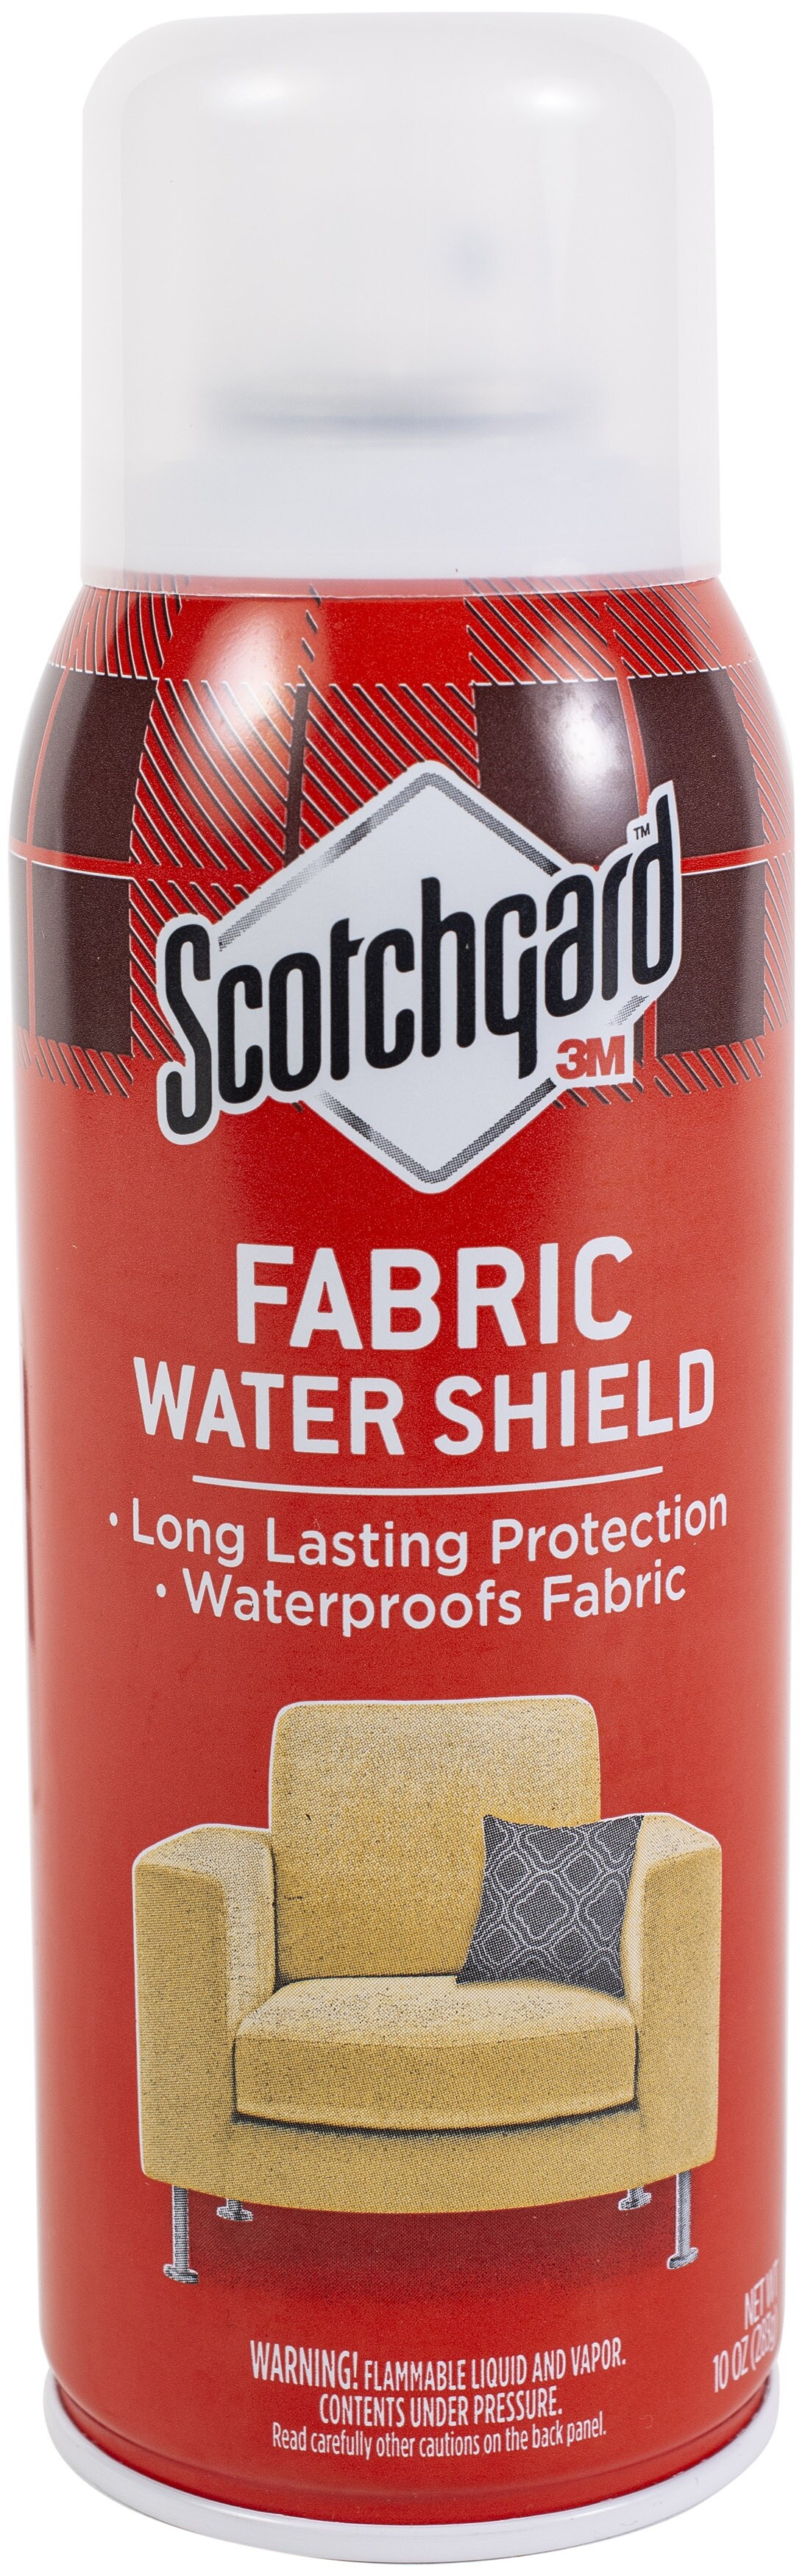 Scotchgard Water Shield, Fabric - 10 oz